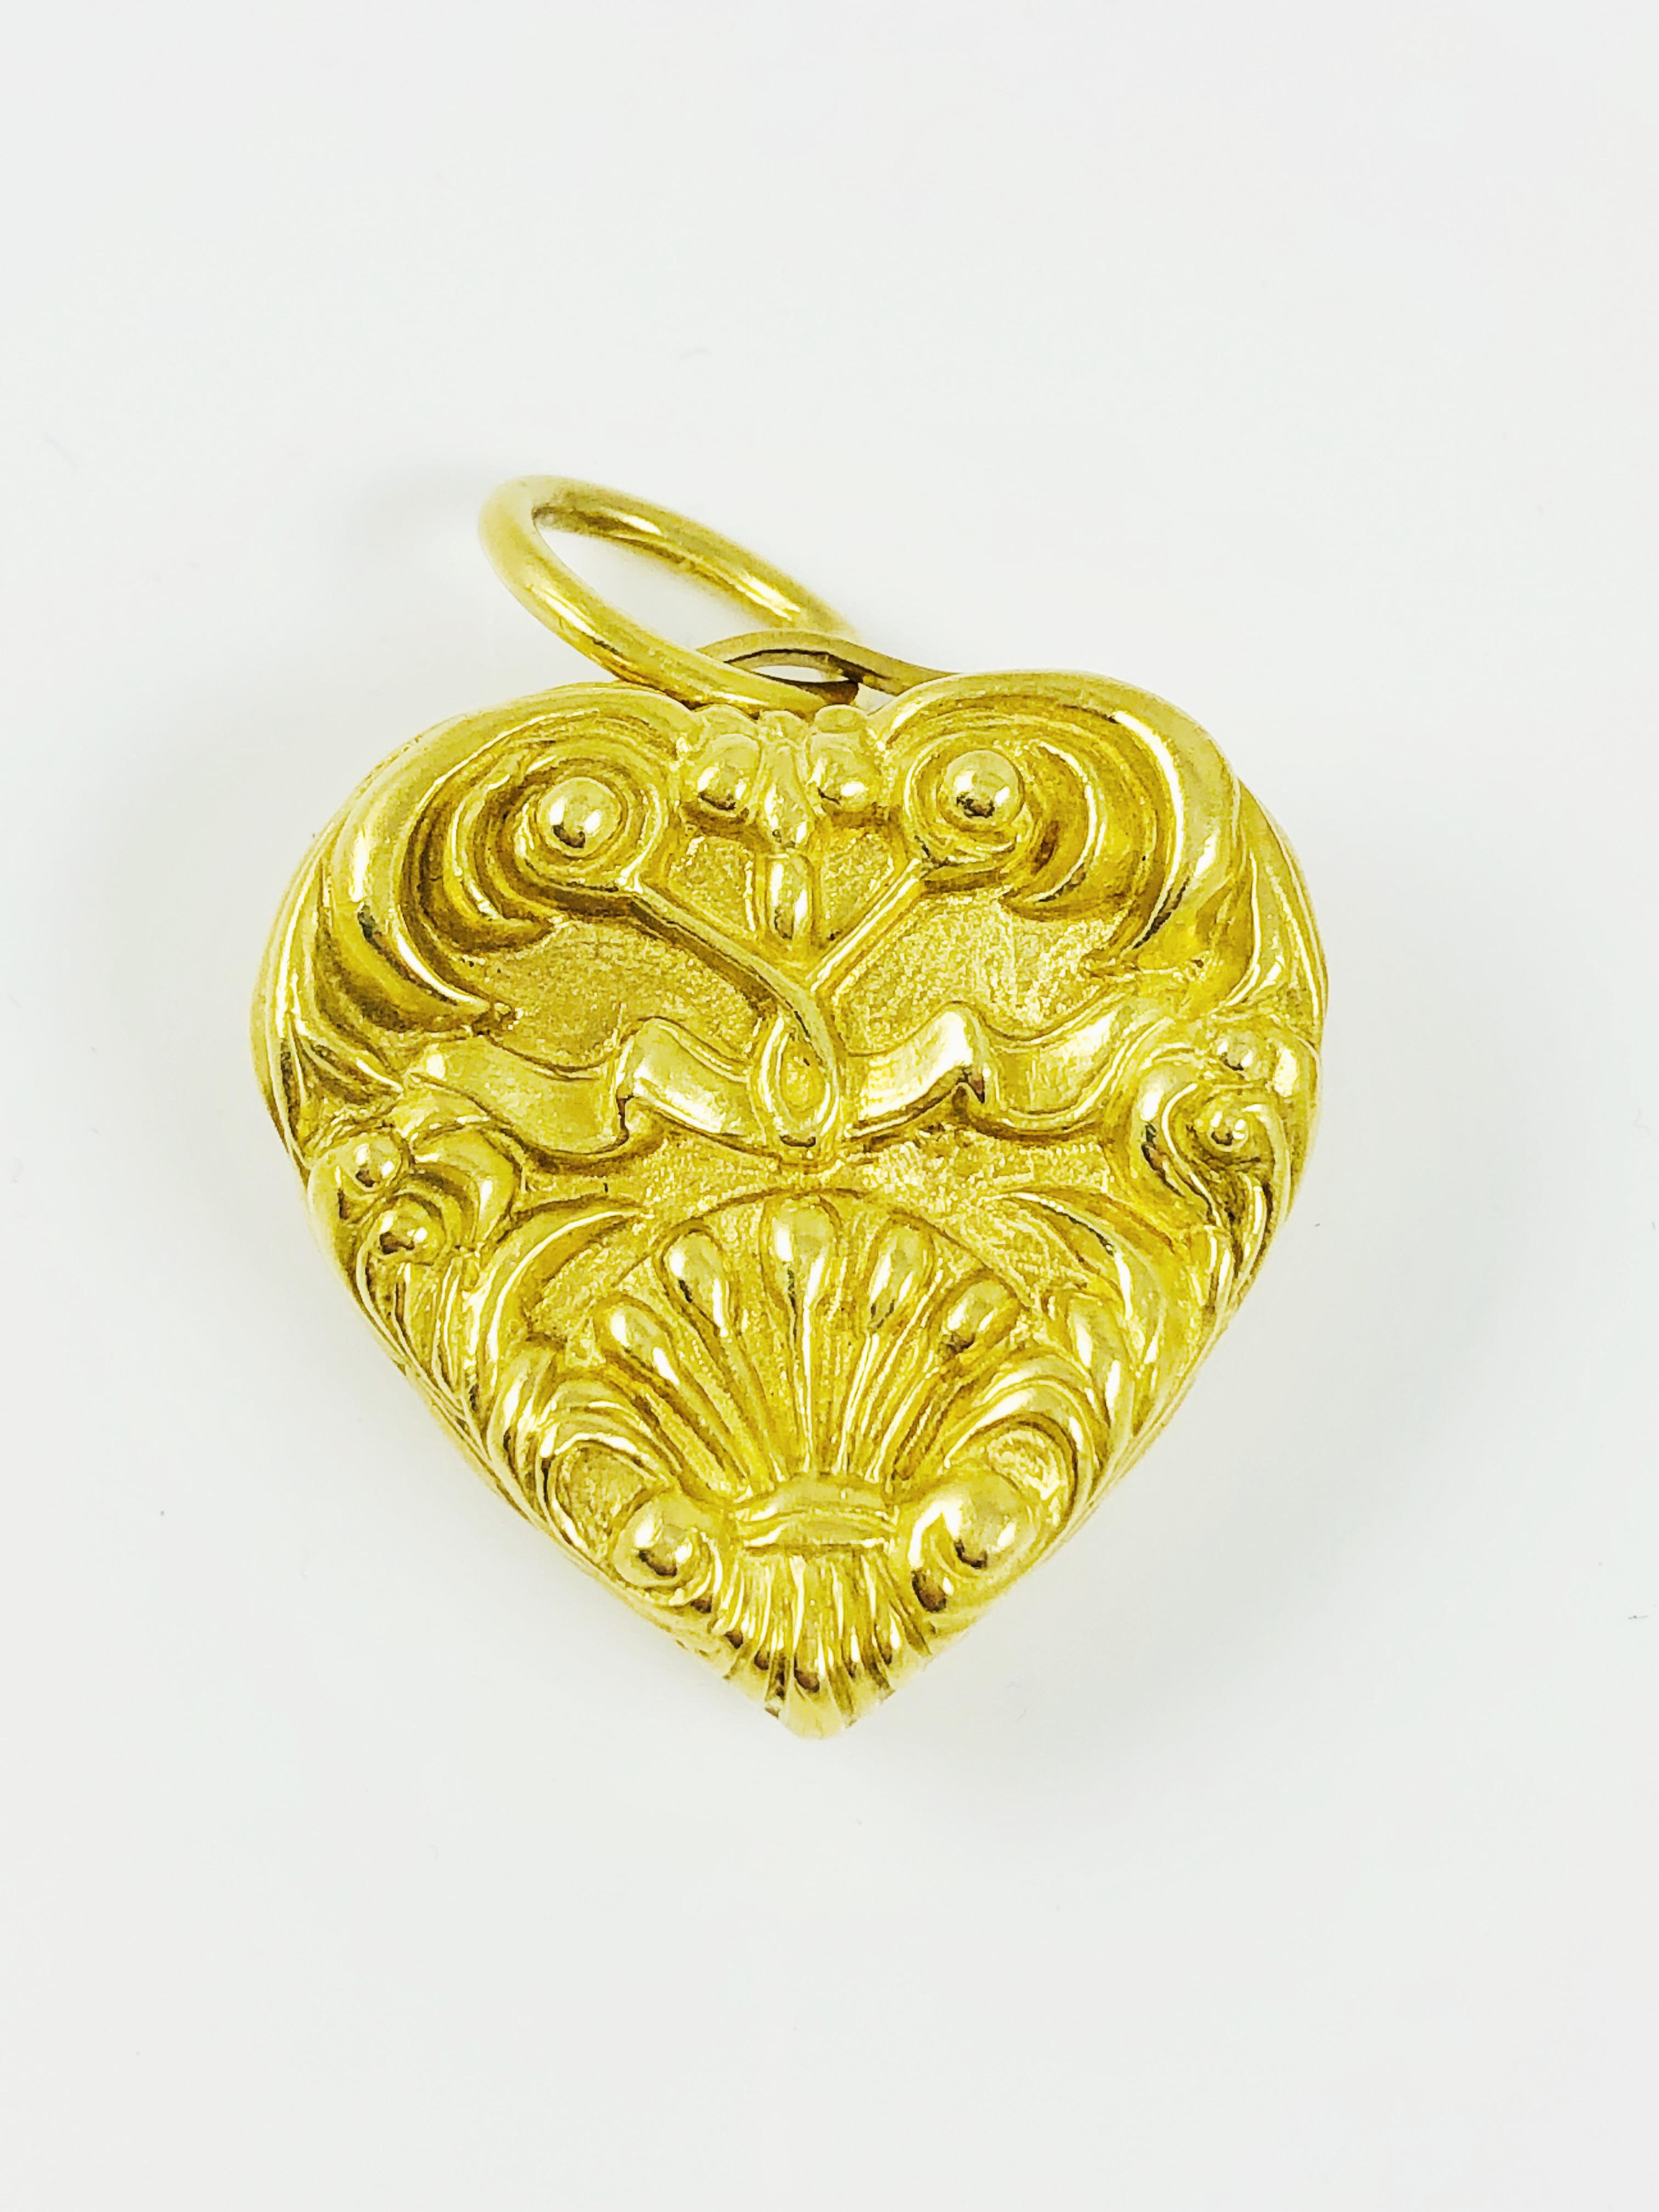 Marlene Stowe 18 Karat Yellow Gold Heart Pendant and Link Chain 7